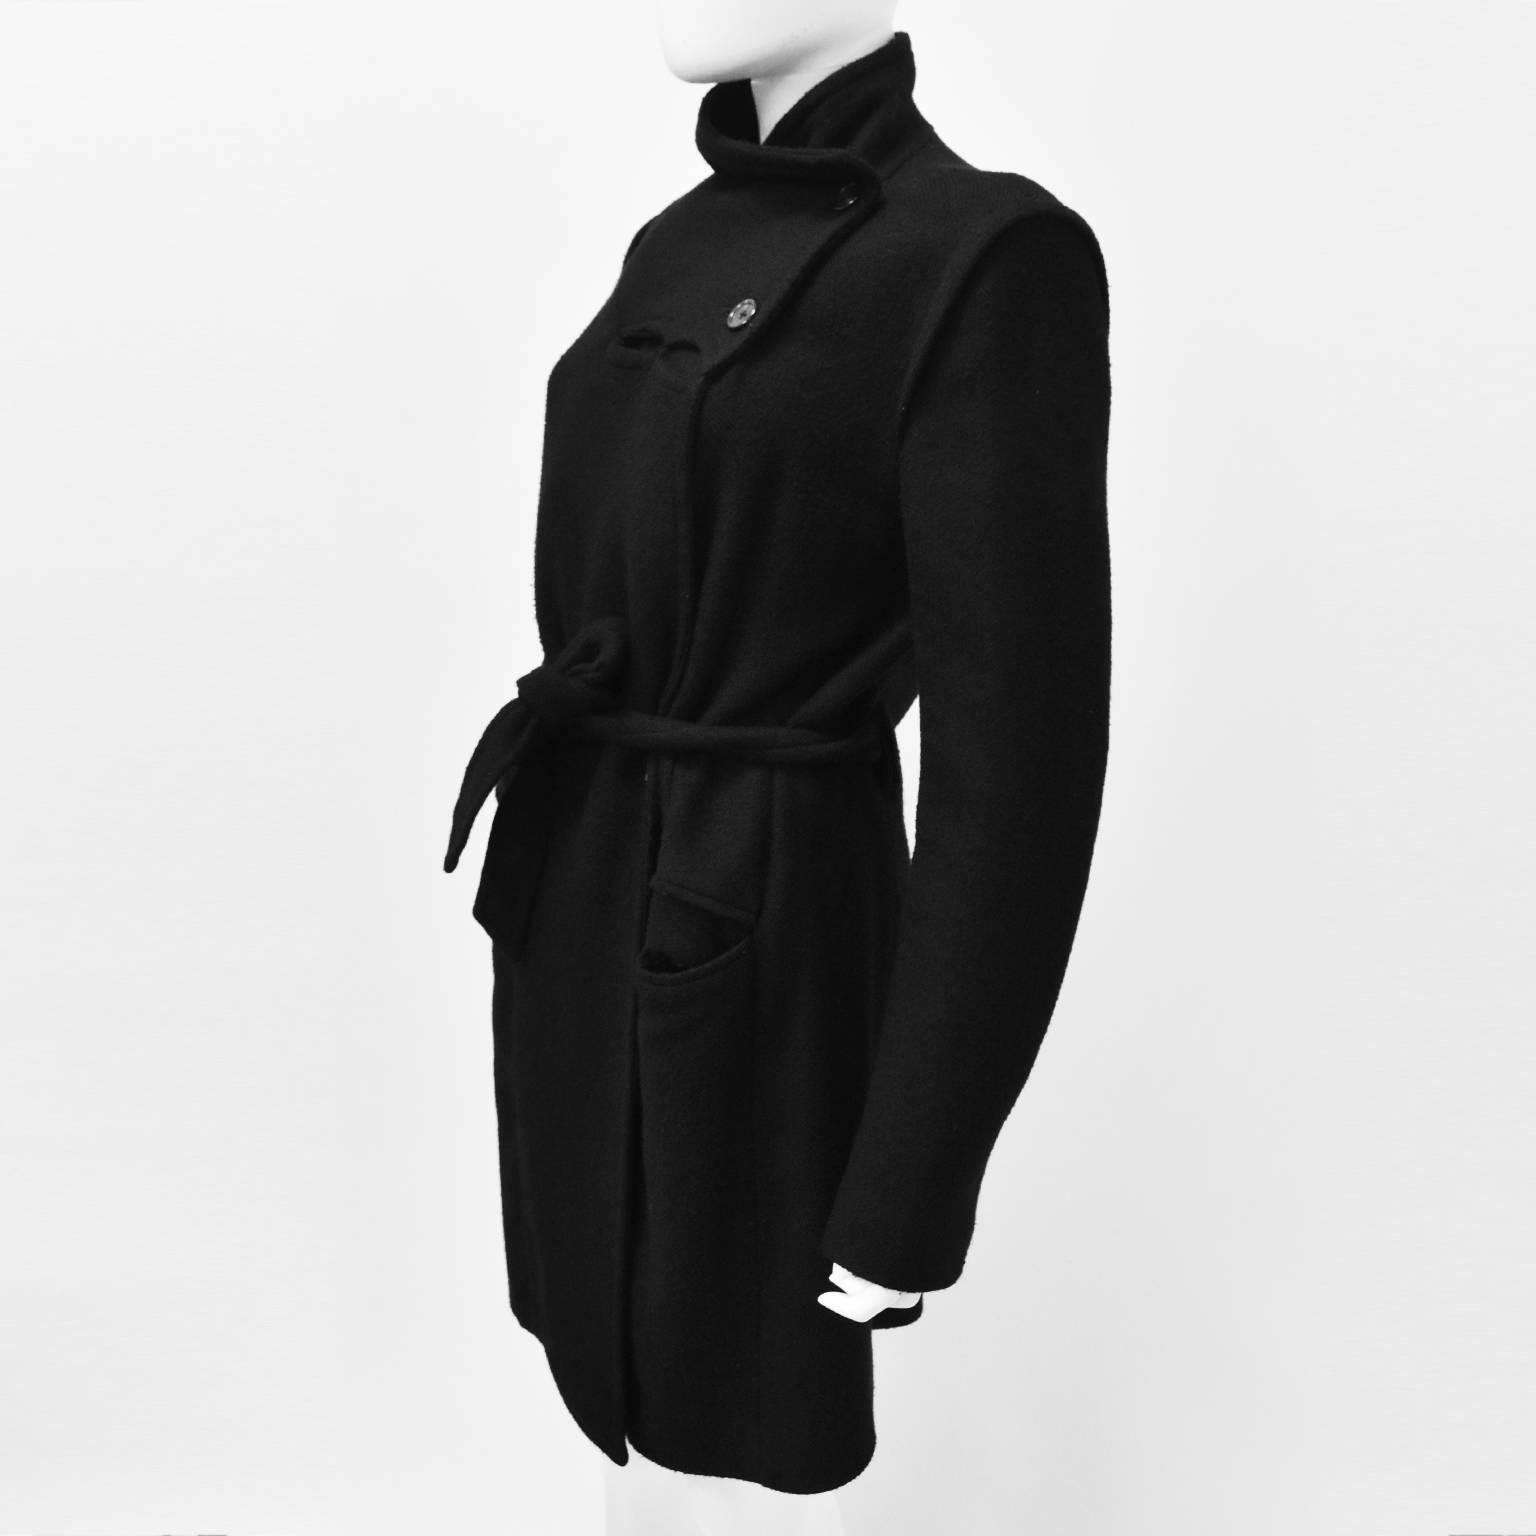 Women's Ann Demeulemeester Black Asymmetric Coat with Collar Details and Tie Waist 